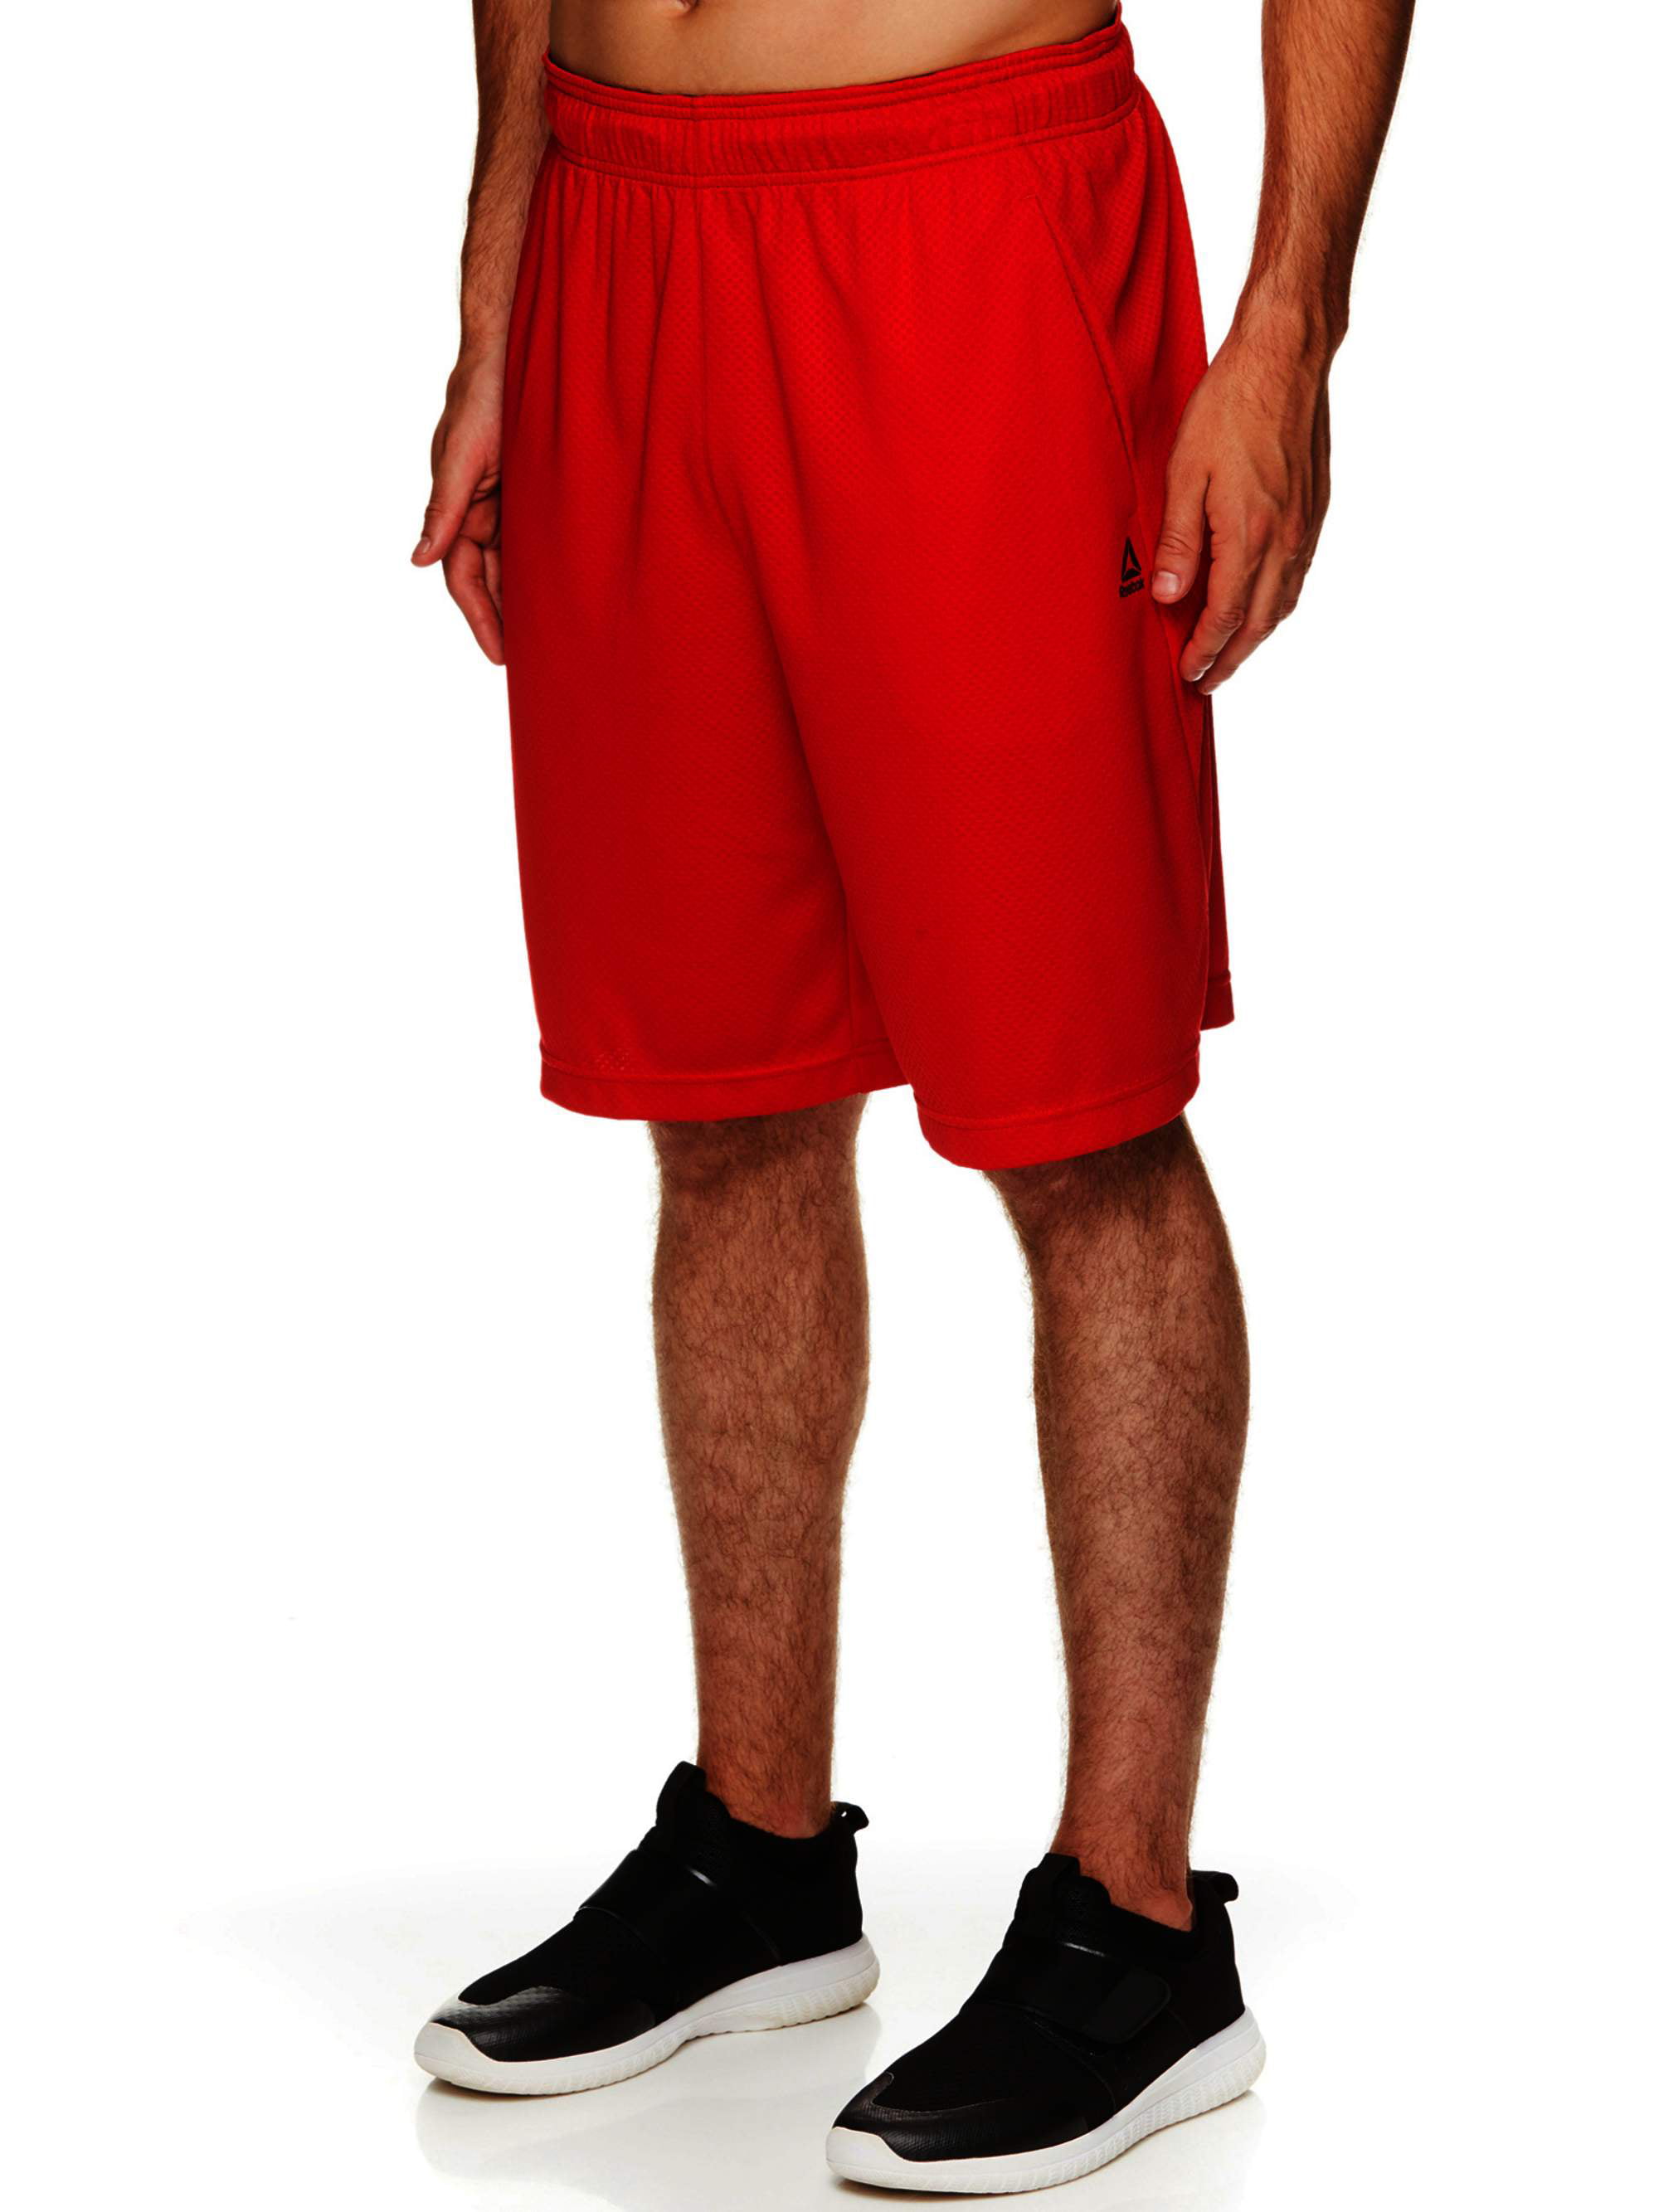 Reebok Men's Open Shot Core Basketball Shorts - Walmart.com